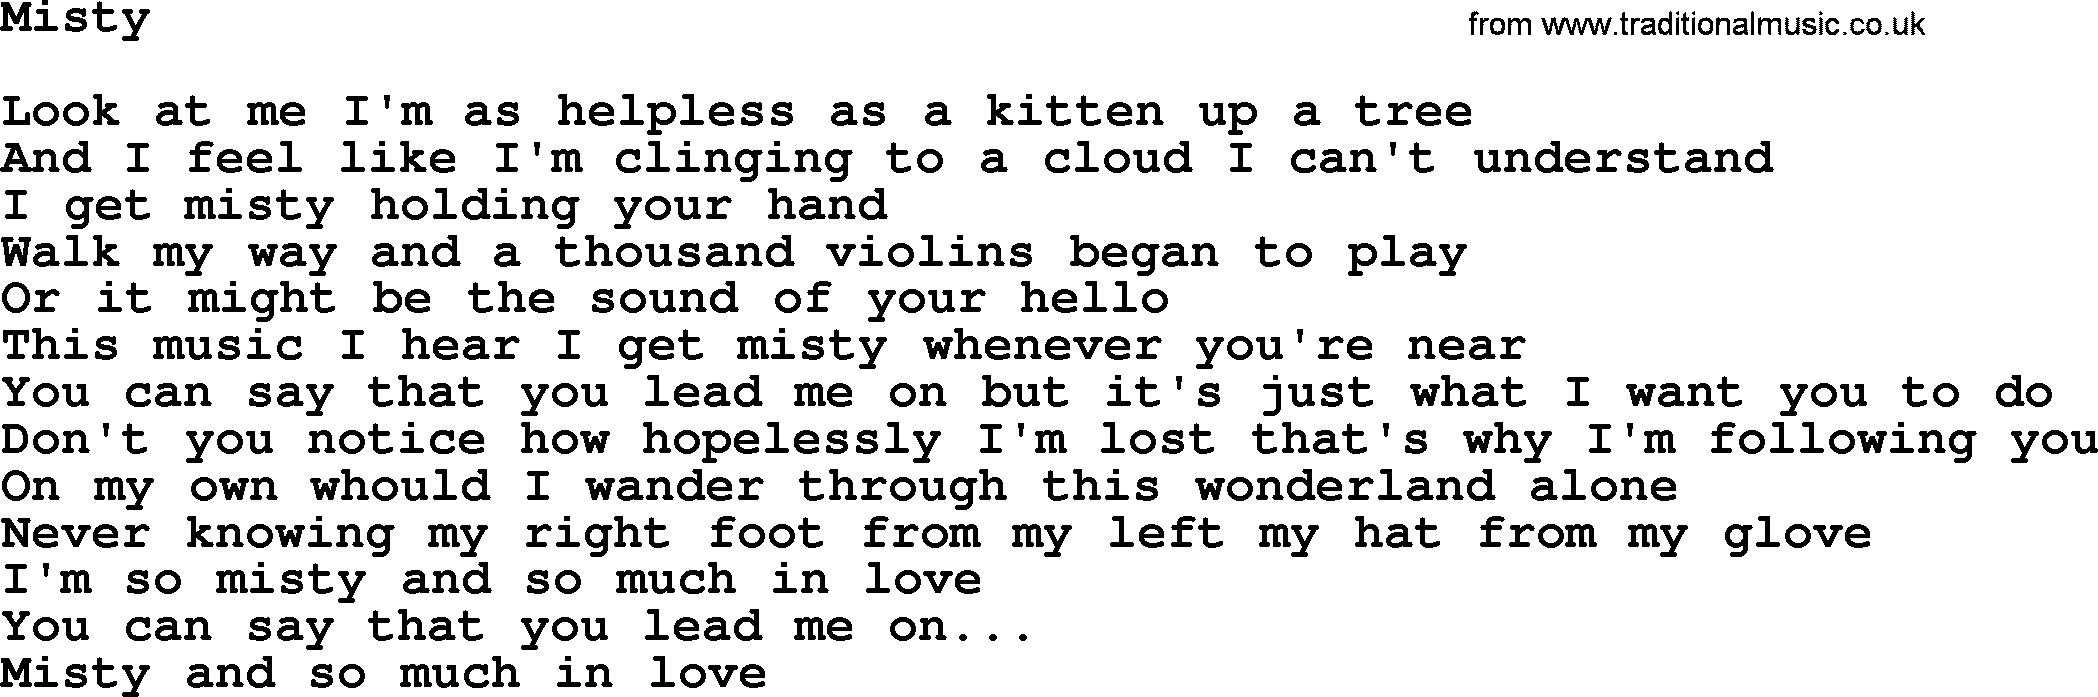 Marty Robbins song: Misty, lyrics